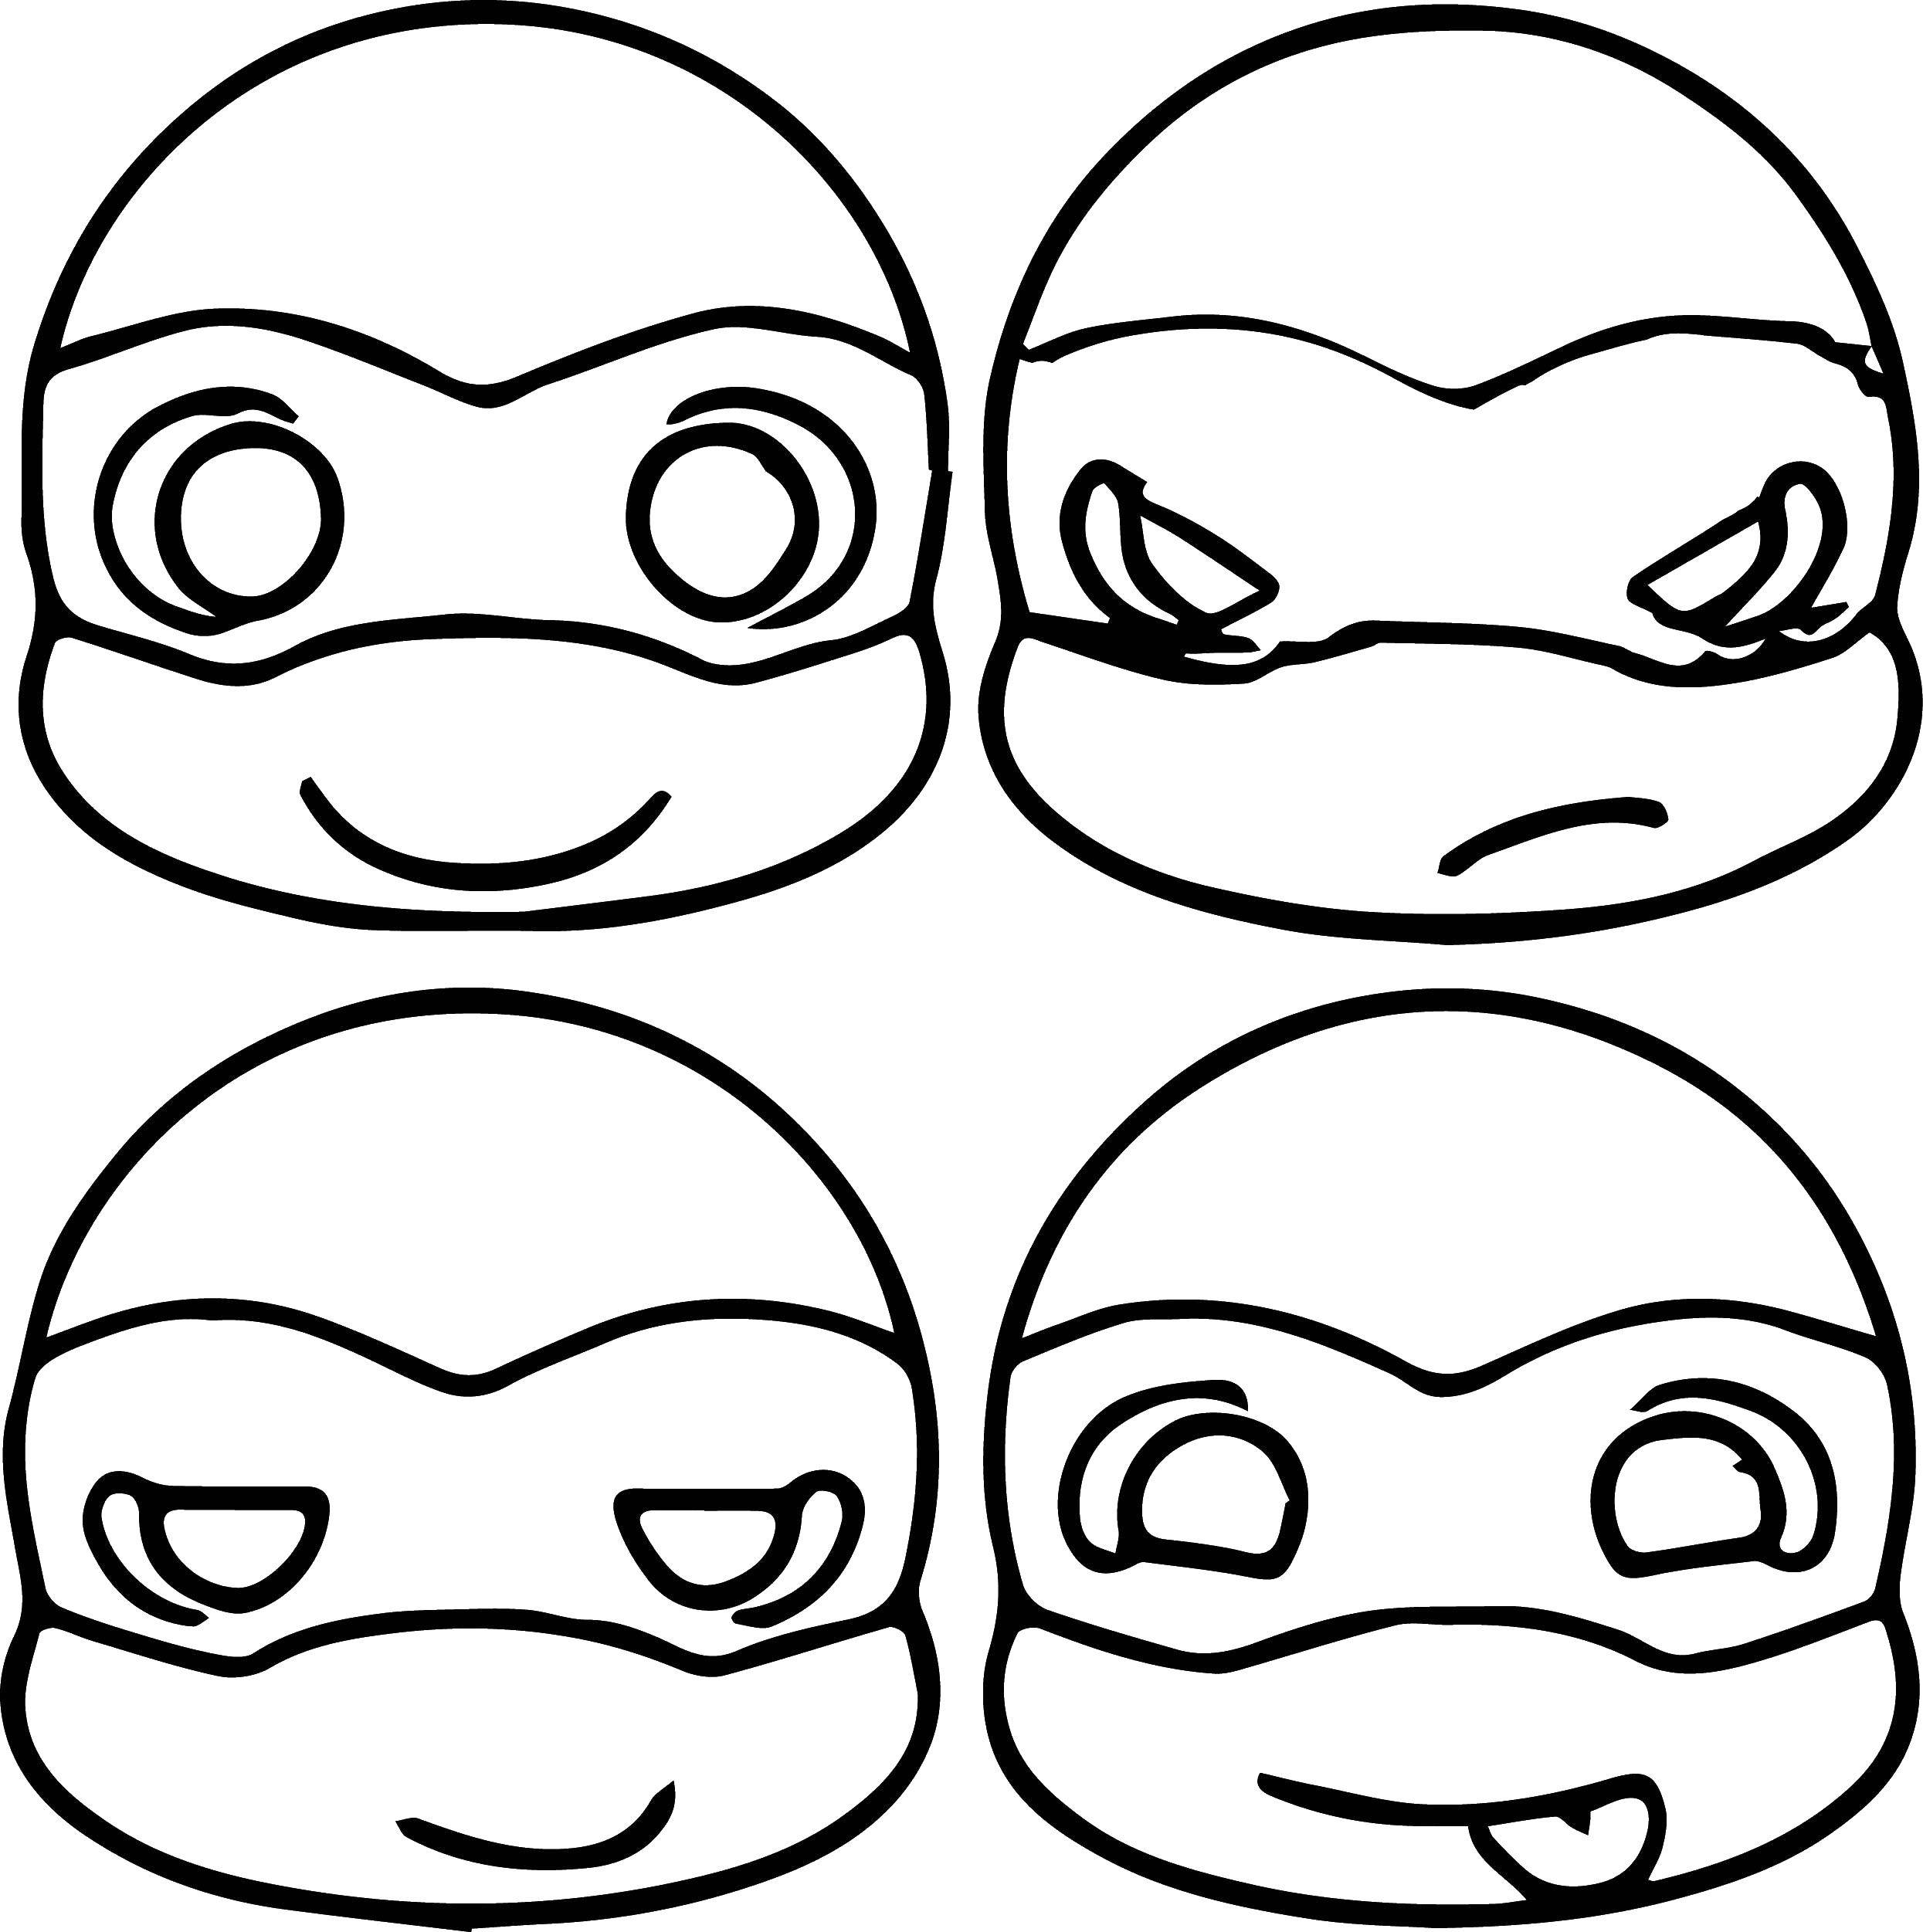 Coloring The heads of the ninja turtles. Category ninja . Tags:  turtles, ninja, mask.